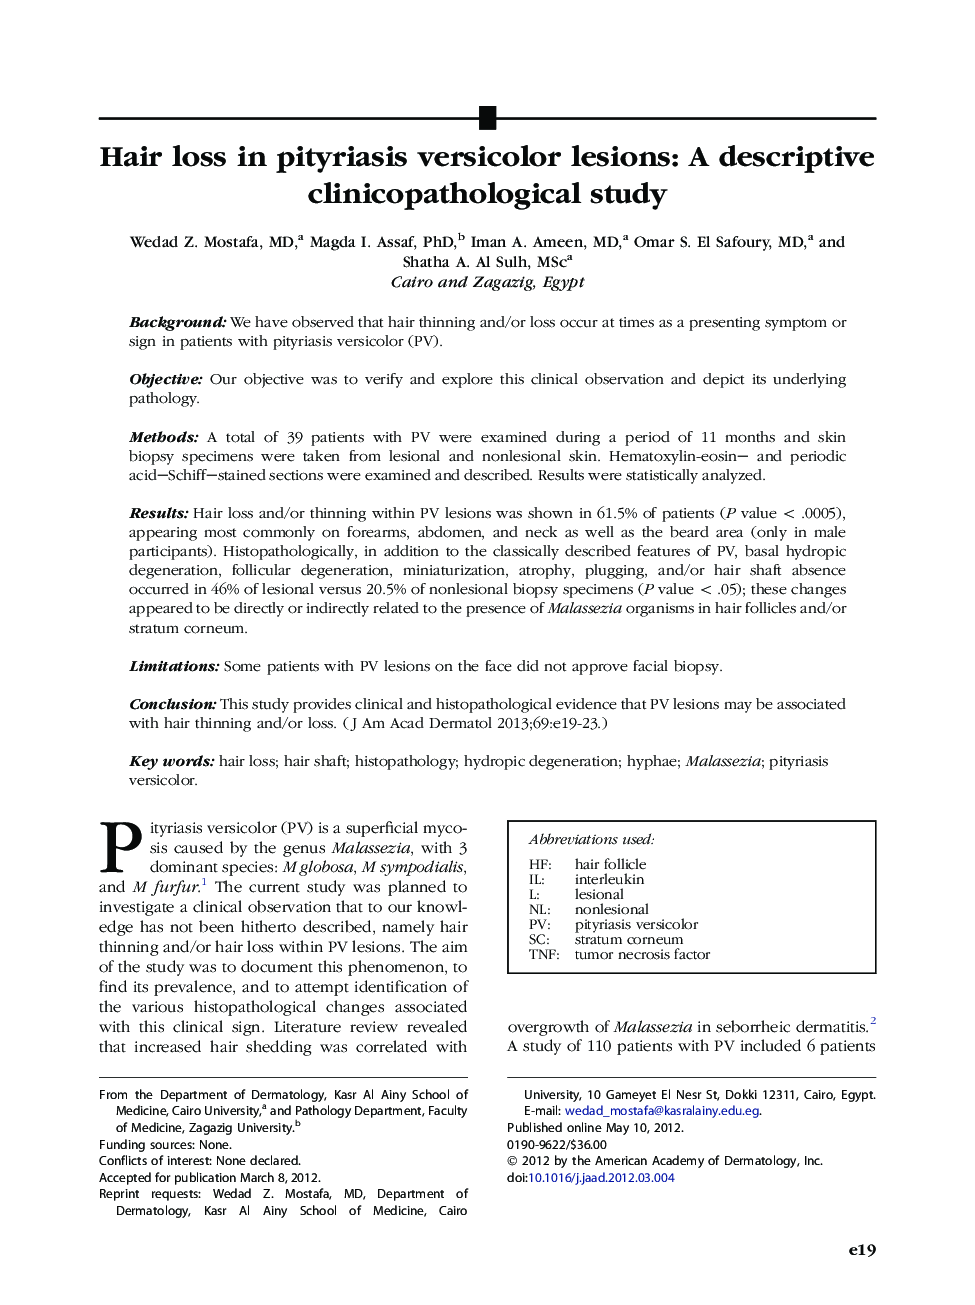 Hair loss in pityriasis versicolor lesions: A descriptive clinicopathological study 